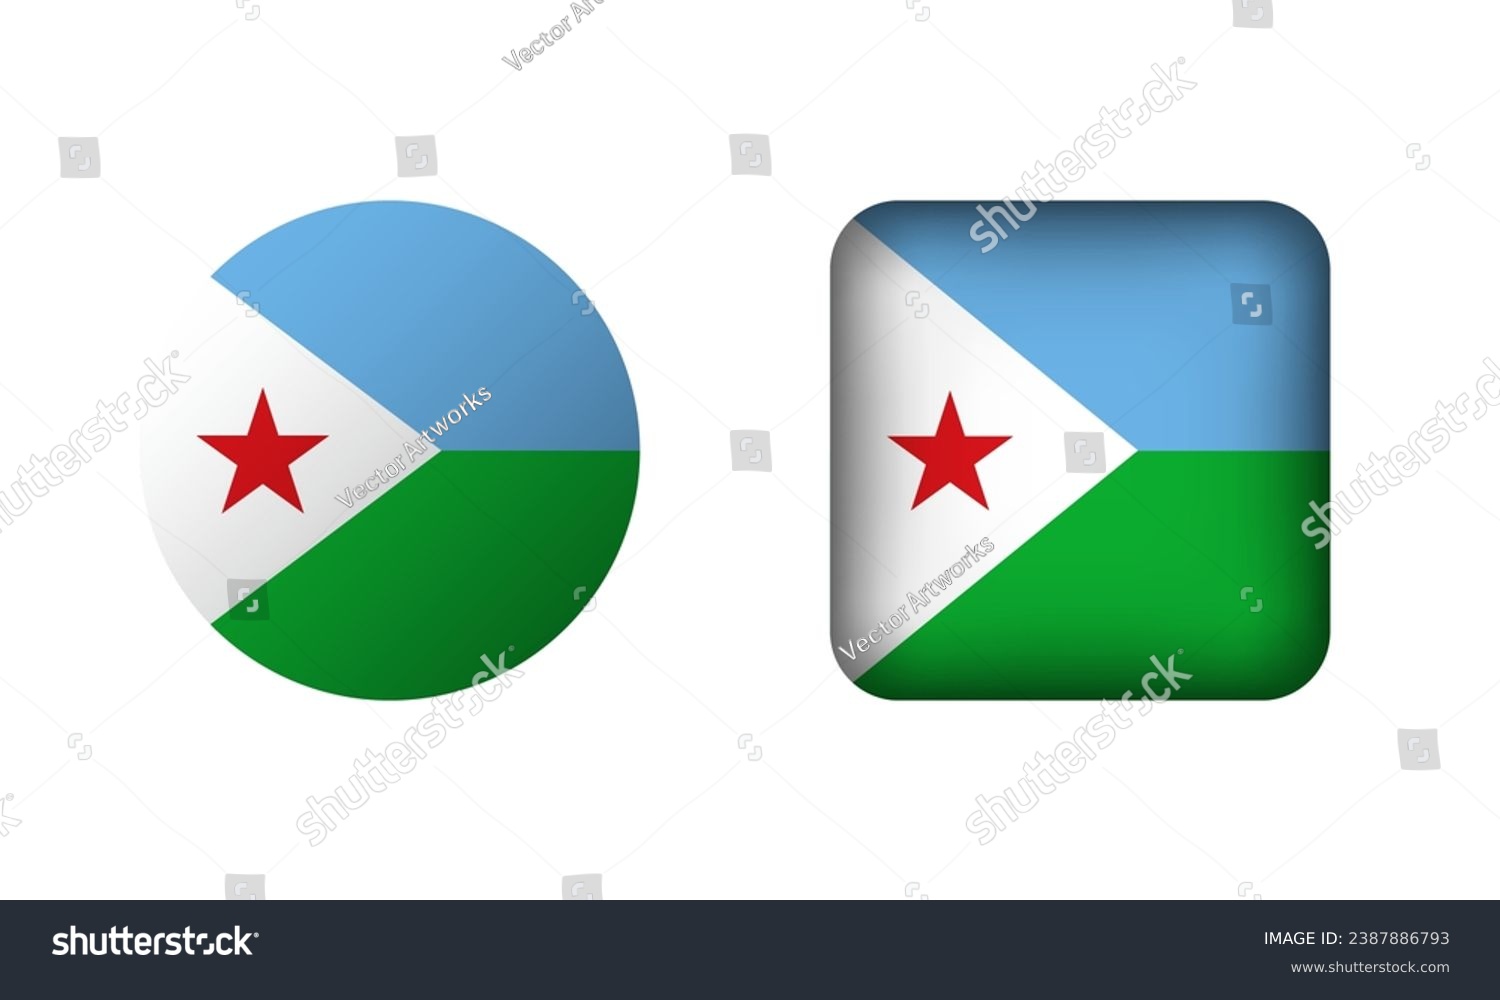 SVG of Flat Square and Circle Djibouti National Flag Icons svg